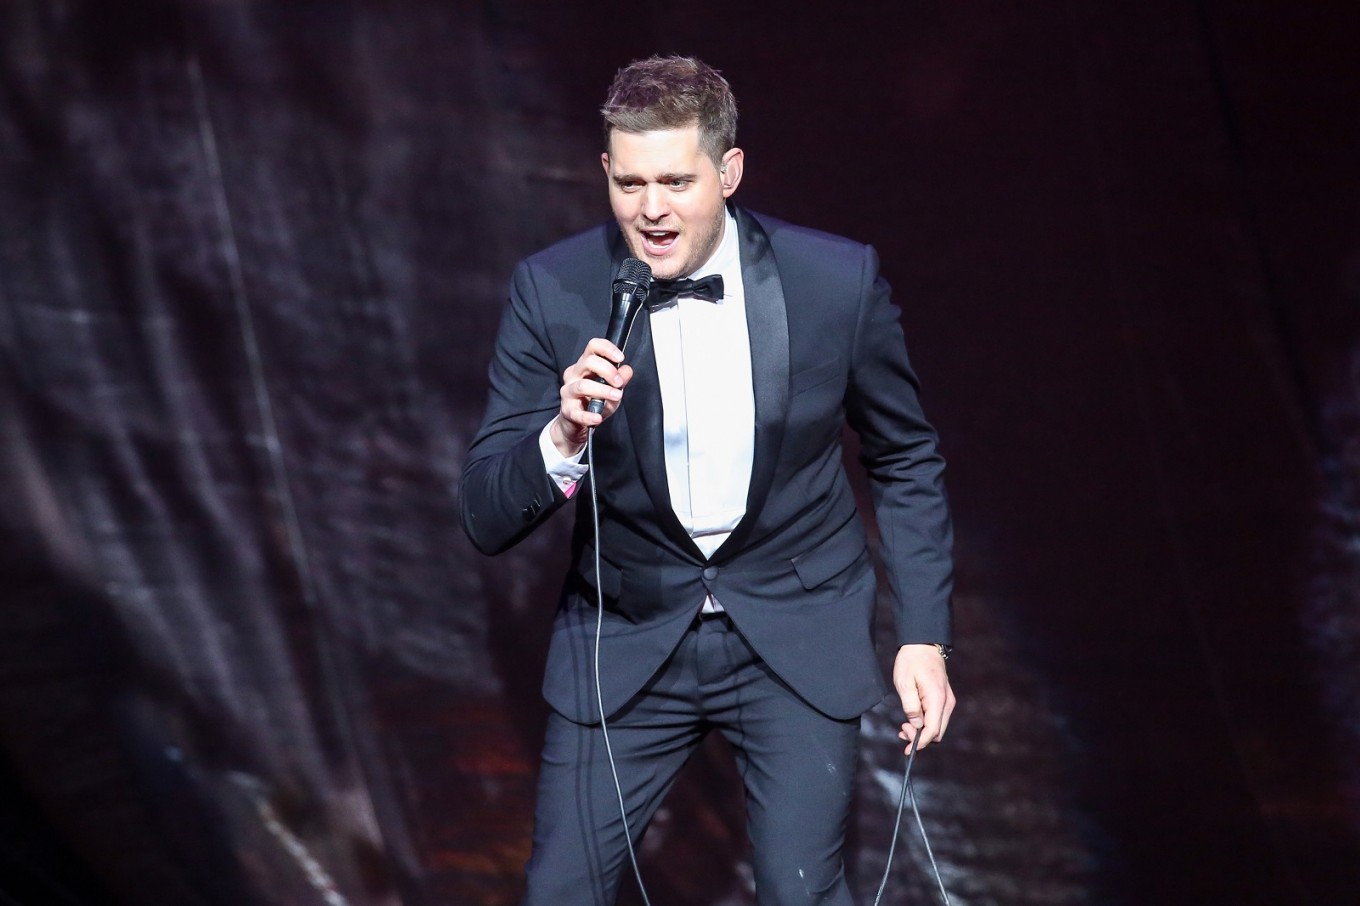 Singer Michael Buble reveals plans to retire in 'last interview',...